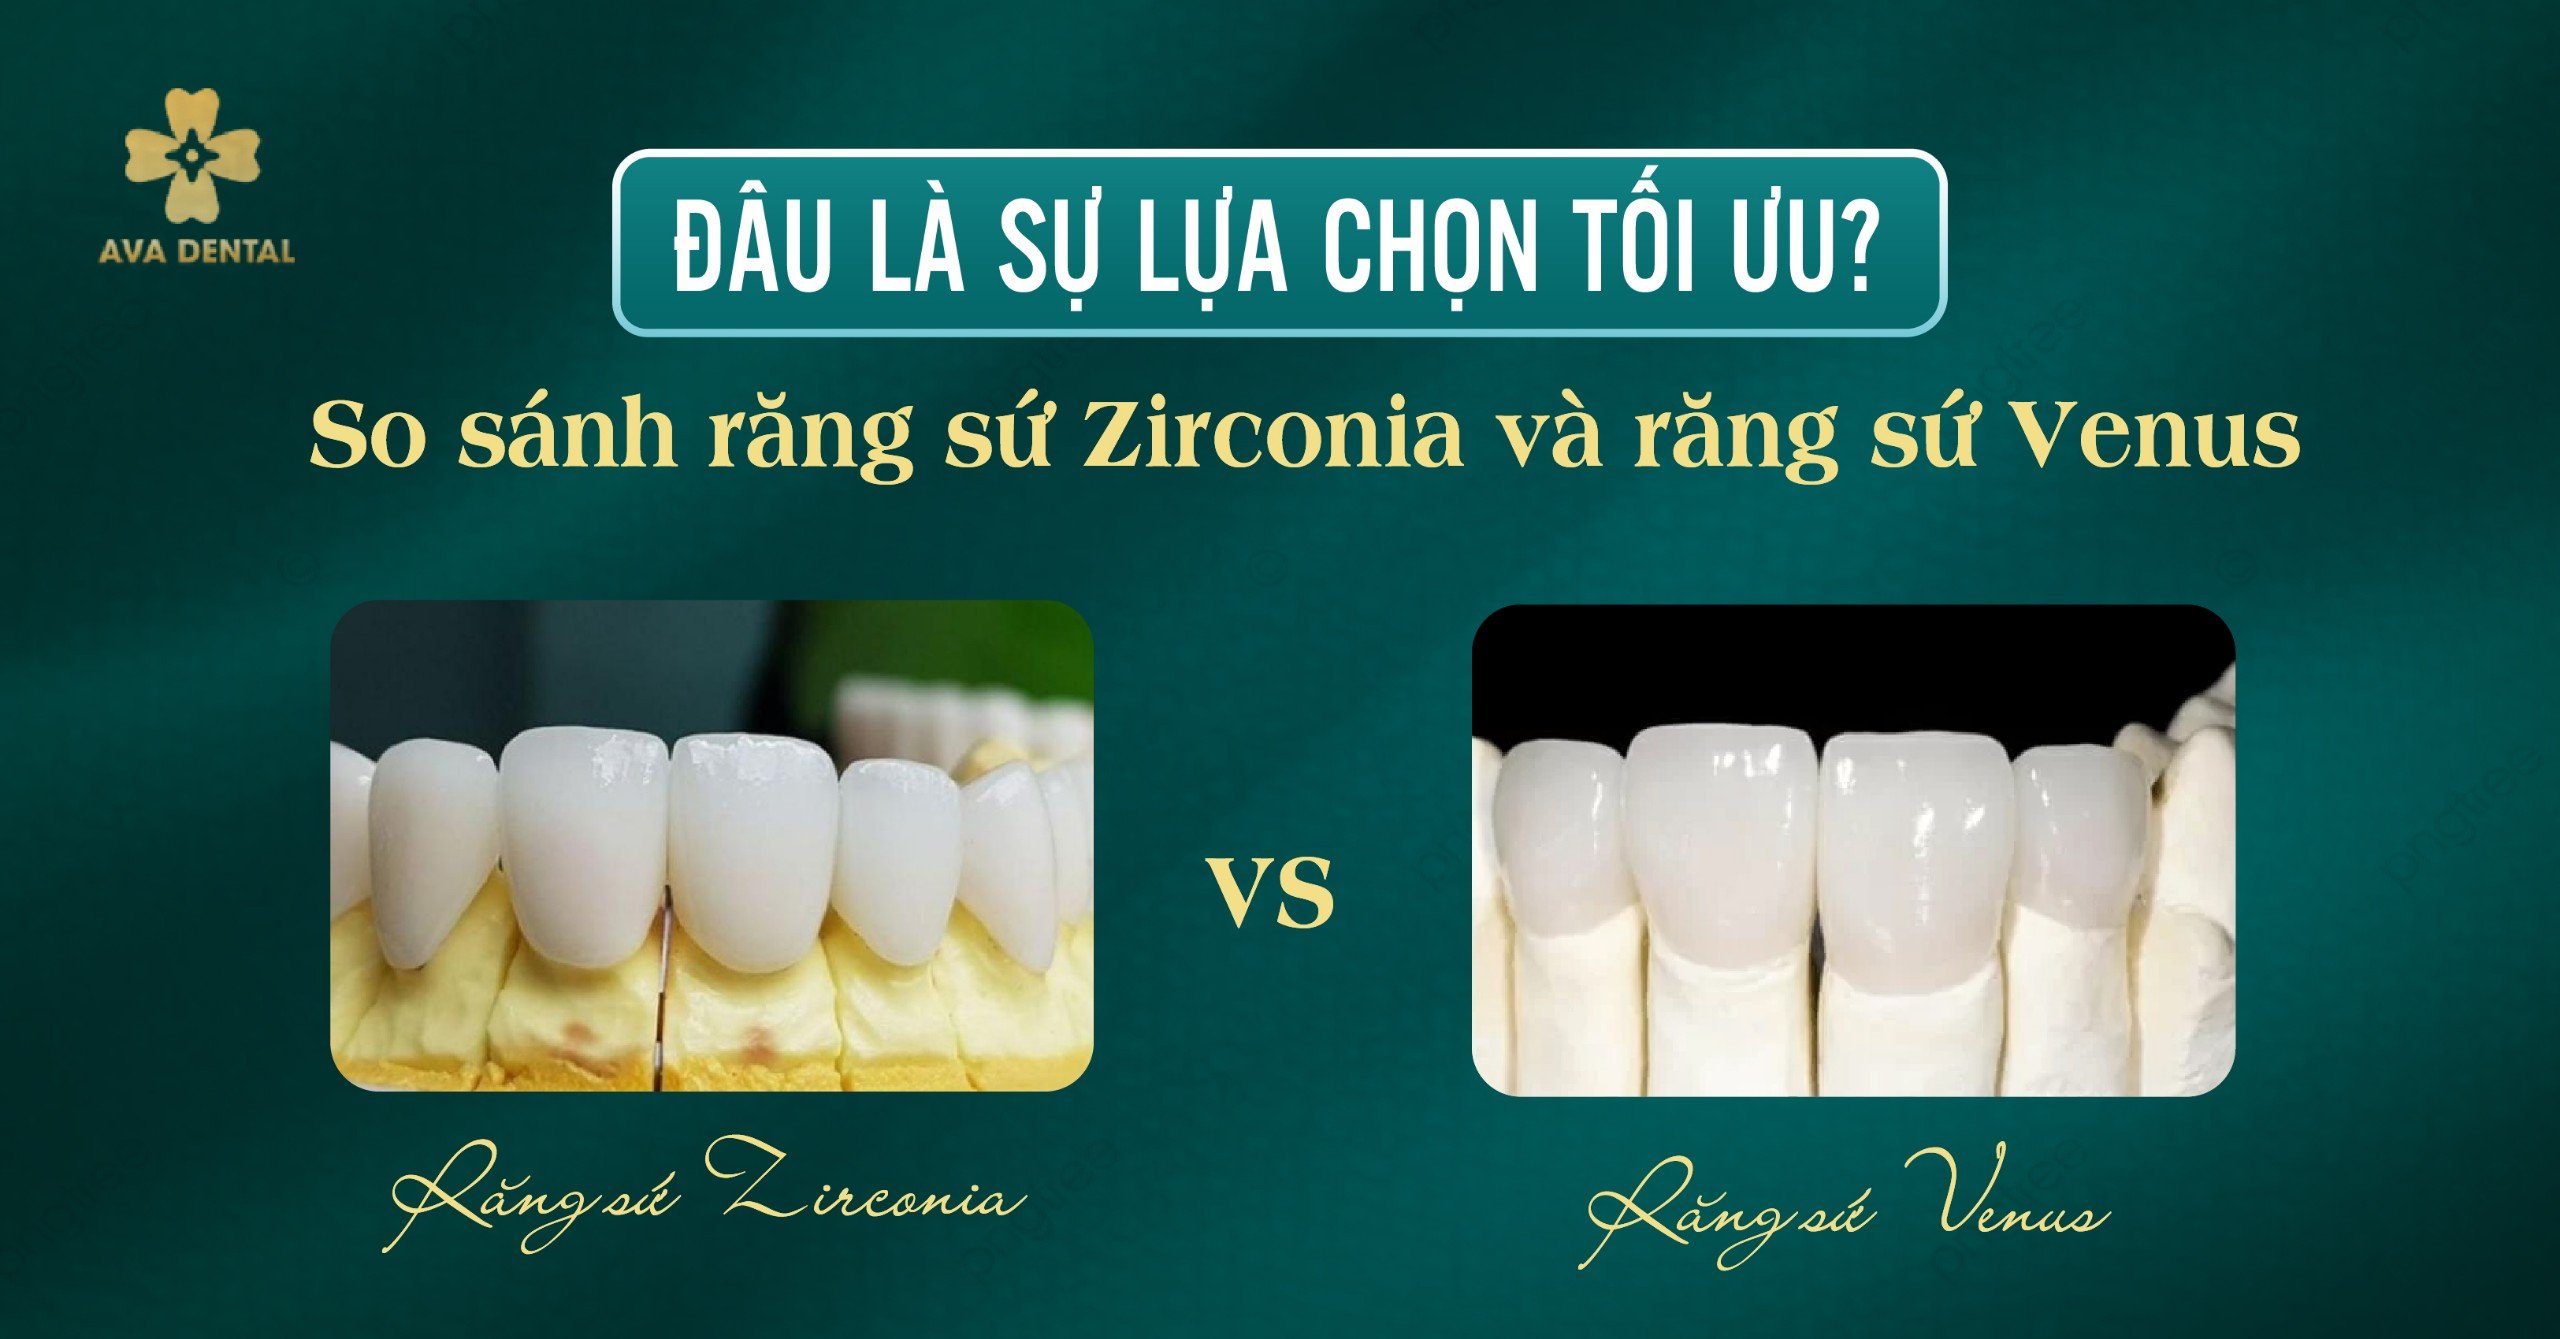 răng sứ Zirconia và Venus